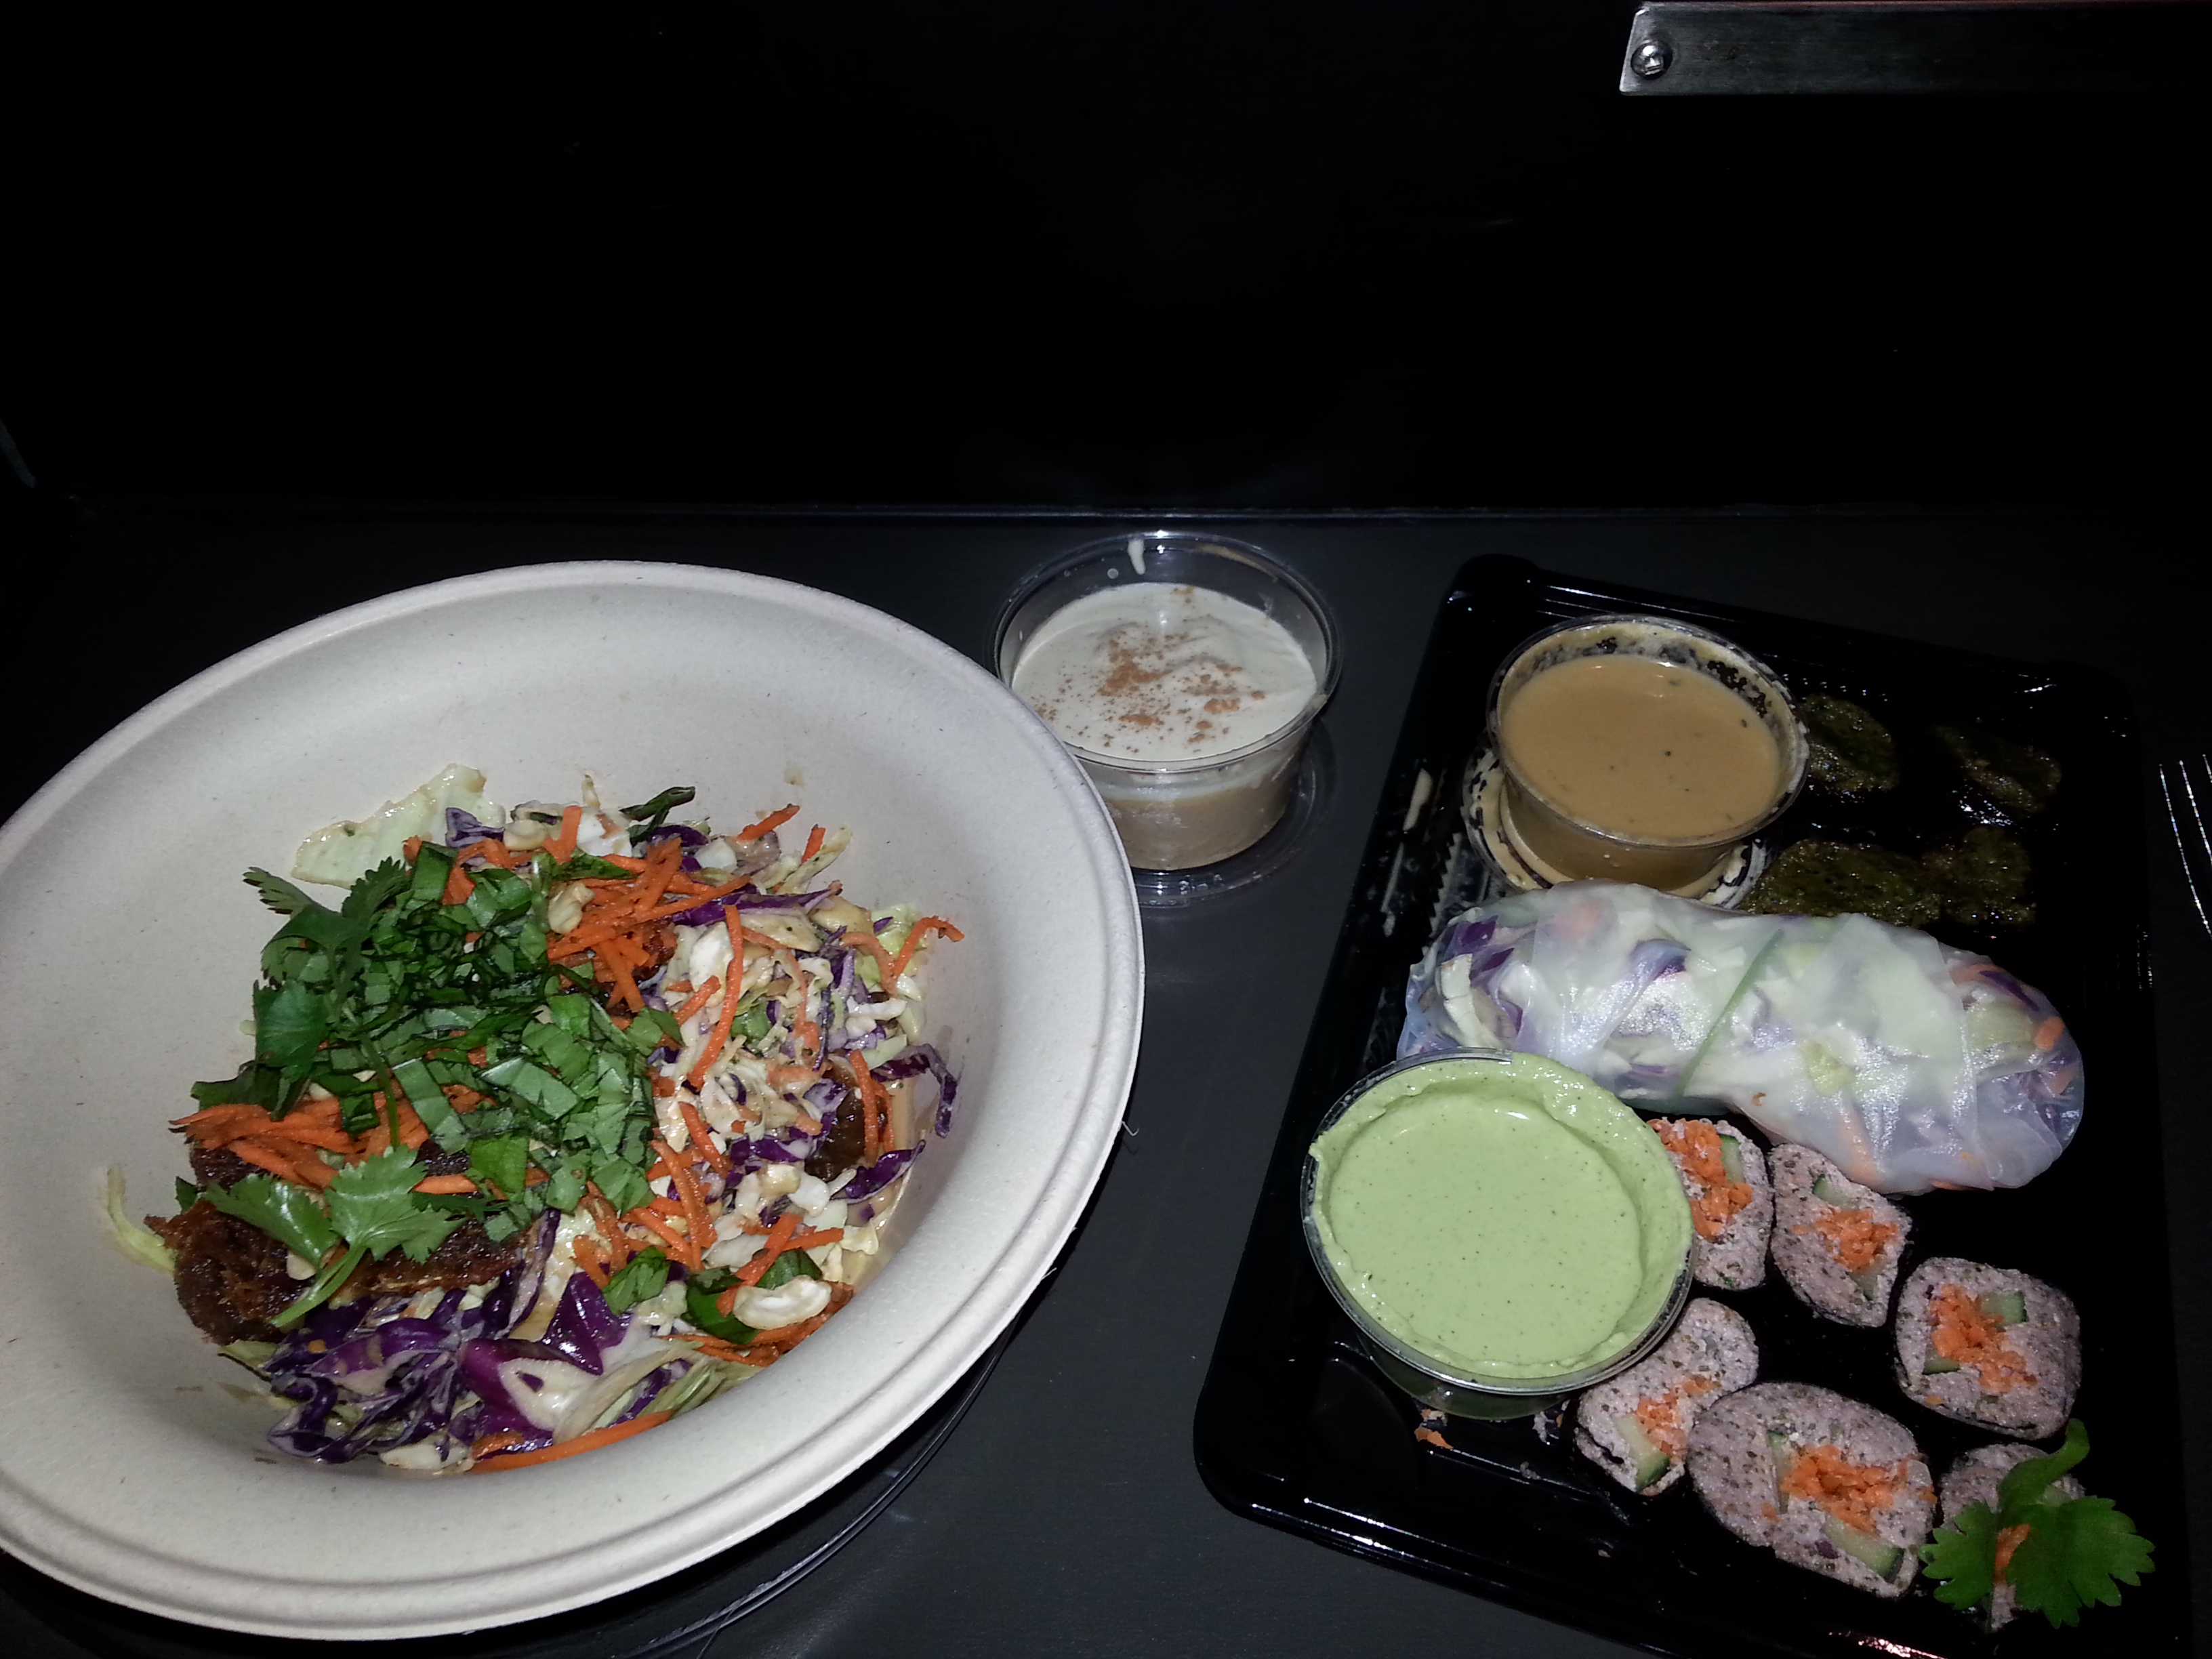 From left to right: Thrive's Mighty Thai Salad, Pumpkin Mousse, Ninja Rolls, Fresh Rolls, and Pesto-Stuffed Mushrooms.